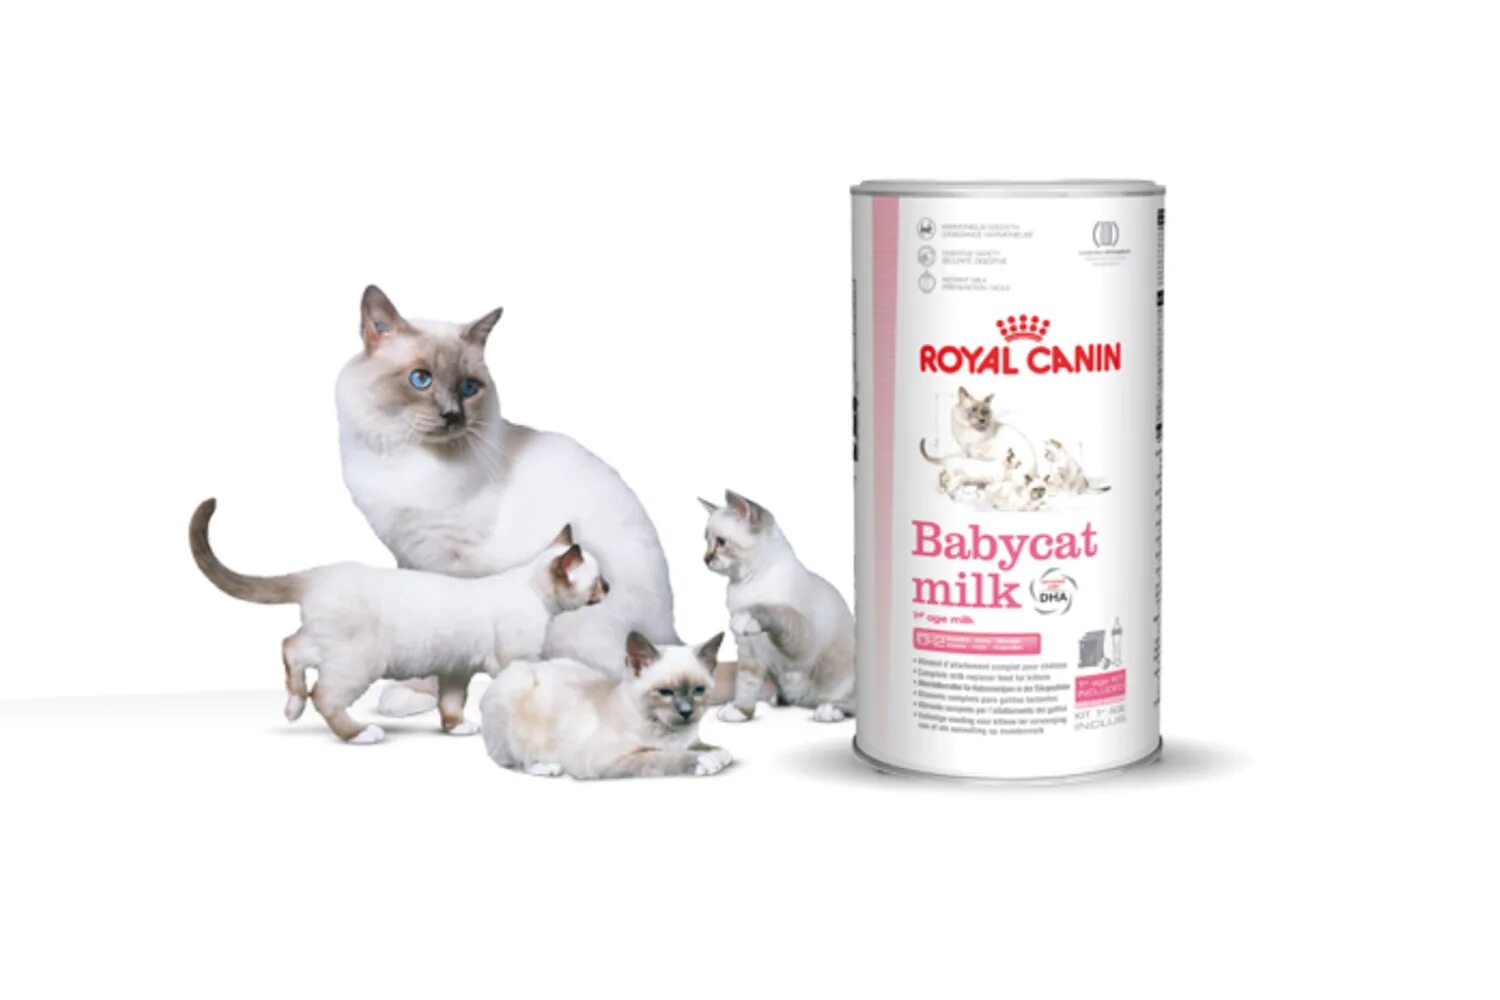 Royal canin babycat. Royal Canin Babycat Milk. Royal Canin Babycat Milk инструкция. Как разводить Royal Canin Babycat Milk. Royal Canin Babycat как разводить.